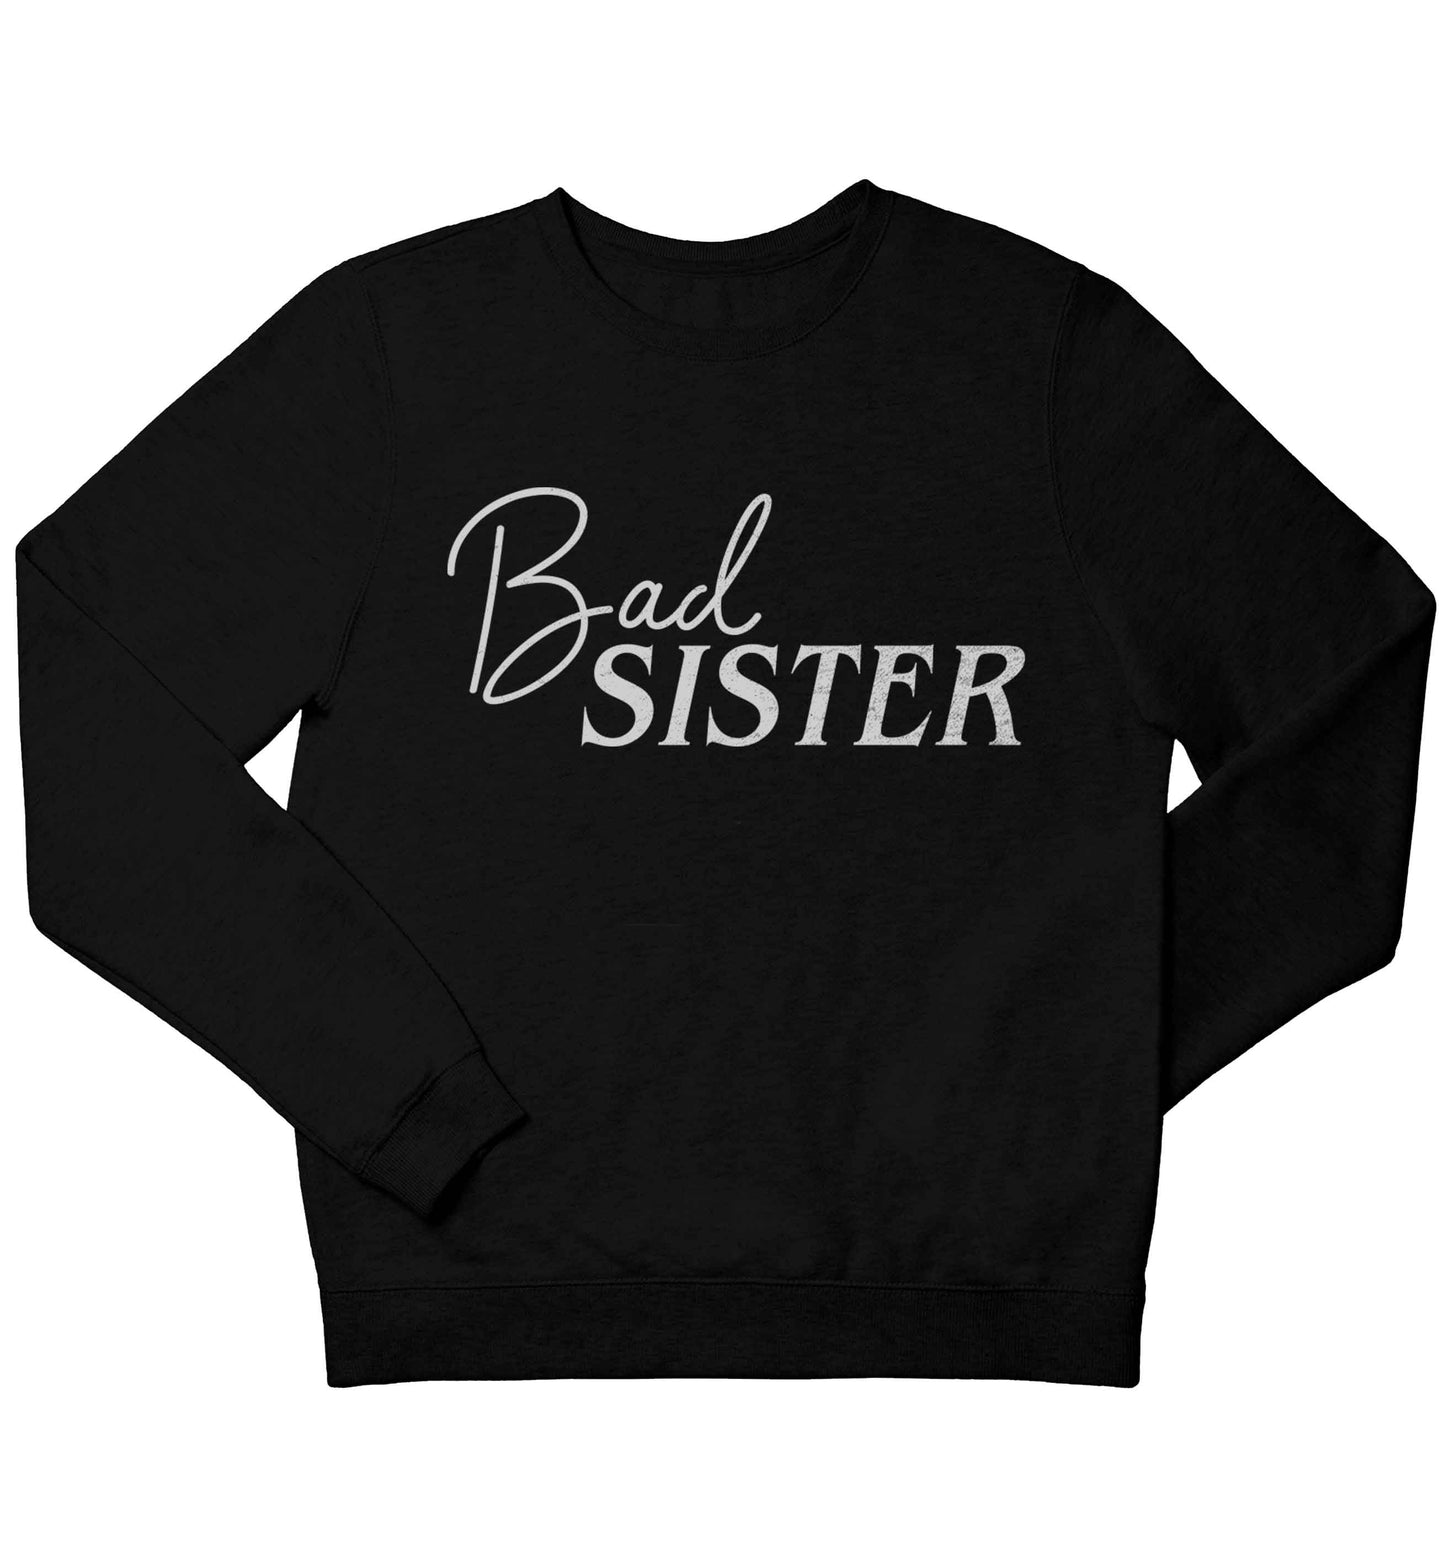 Bad sister children's black sweater 12-13 Years